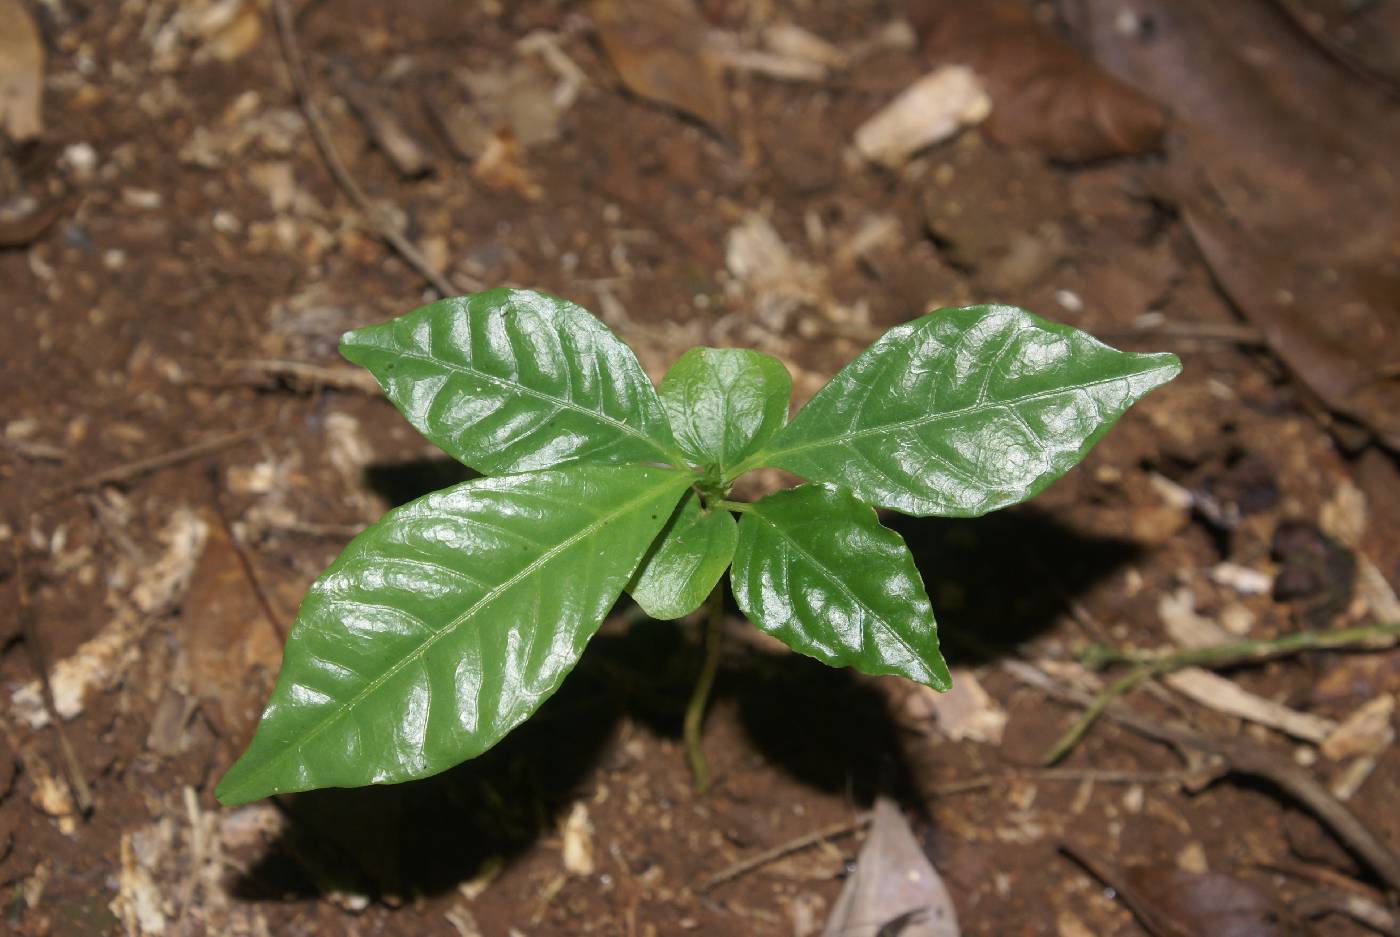 Passiflora image